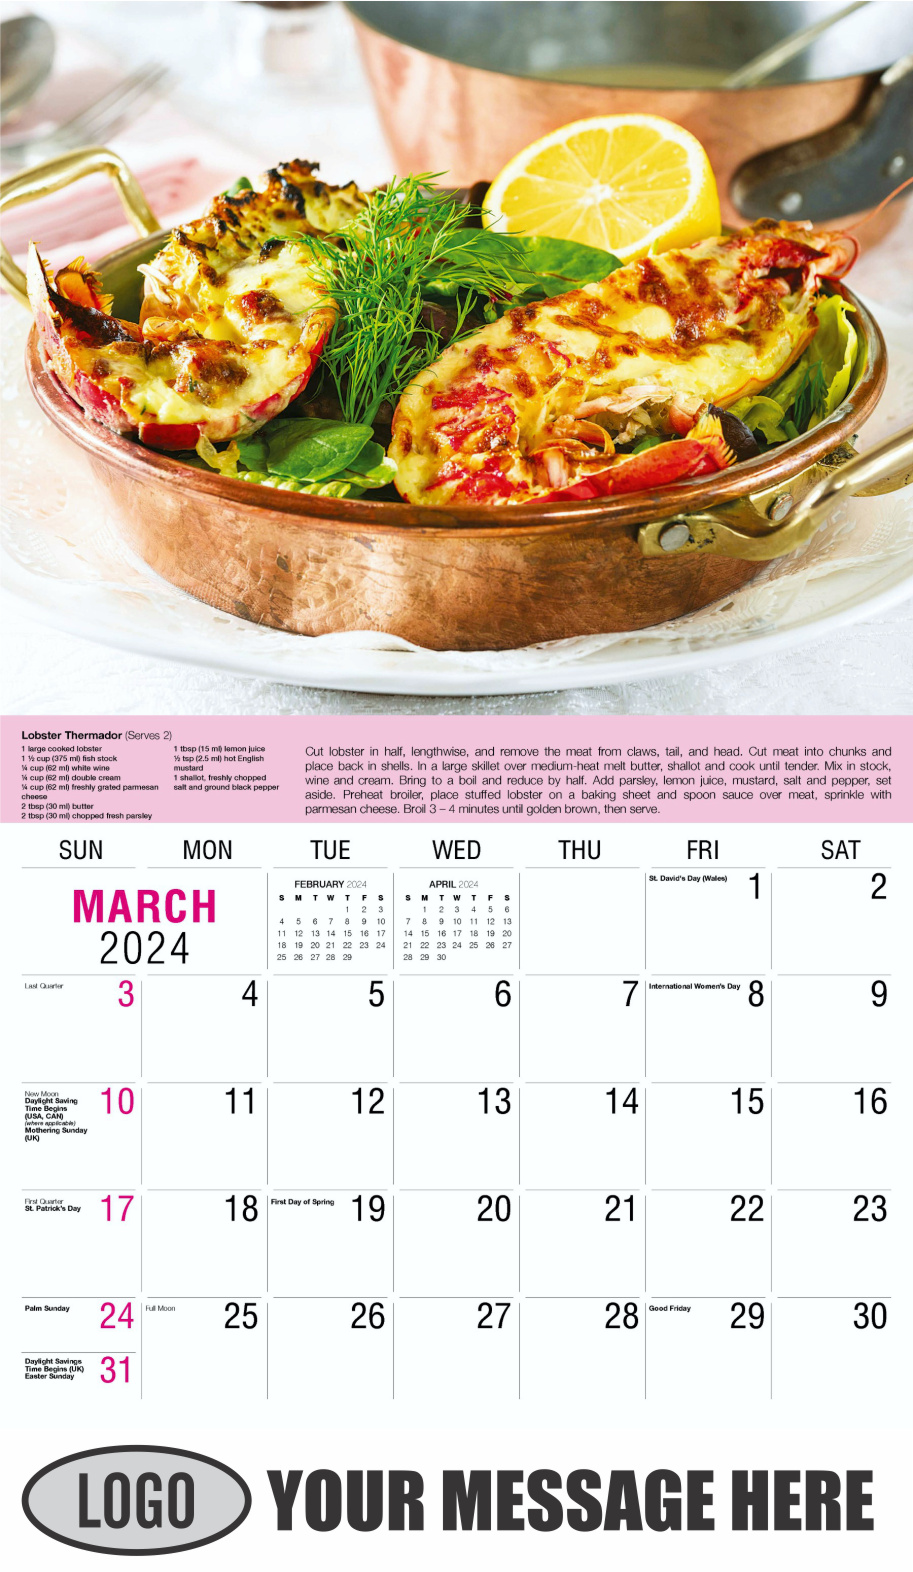 Recipes 2024 Business Promotional Calendar - March